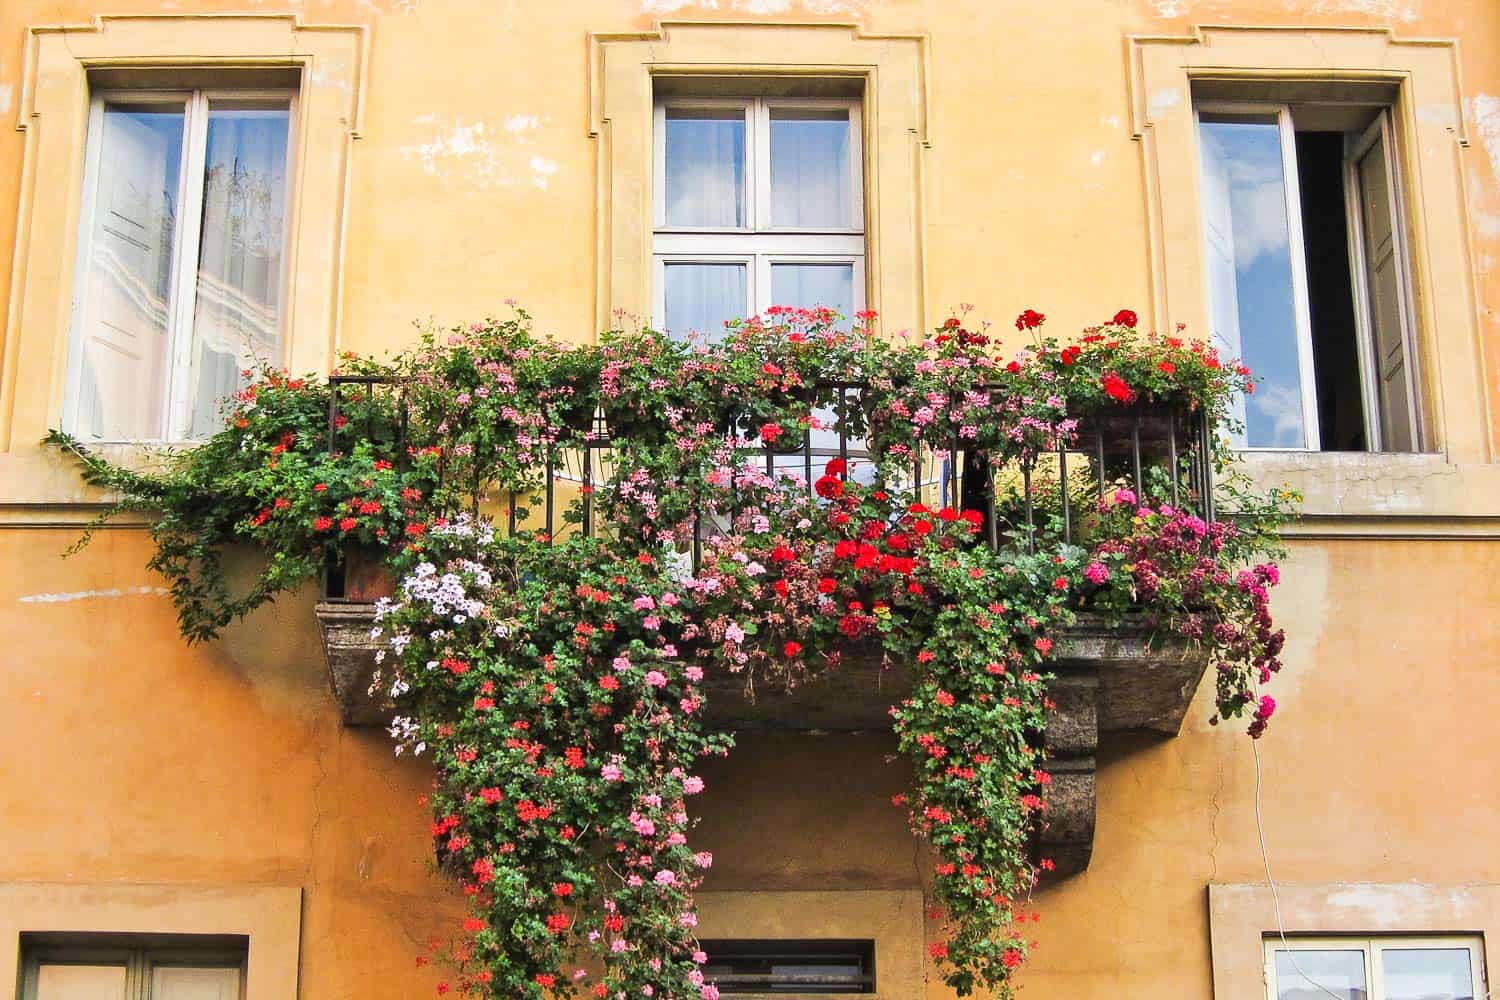 Flowers on a balcony in Trastevere, Rome